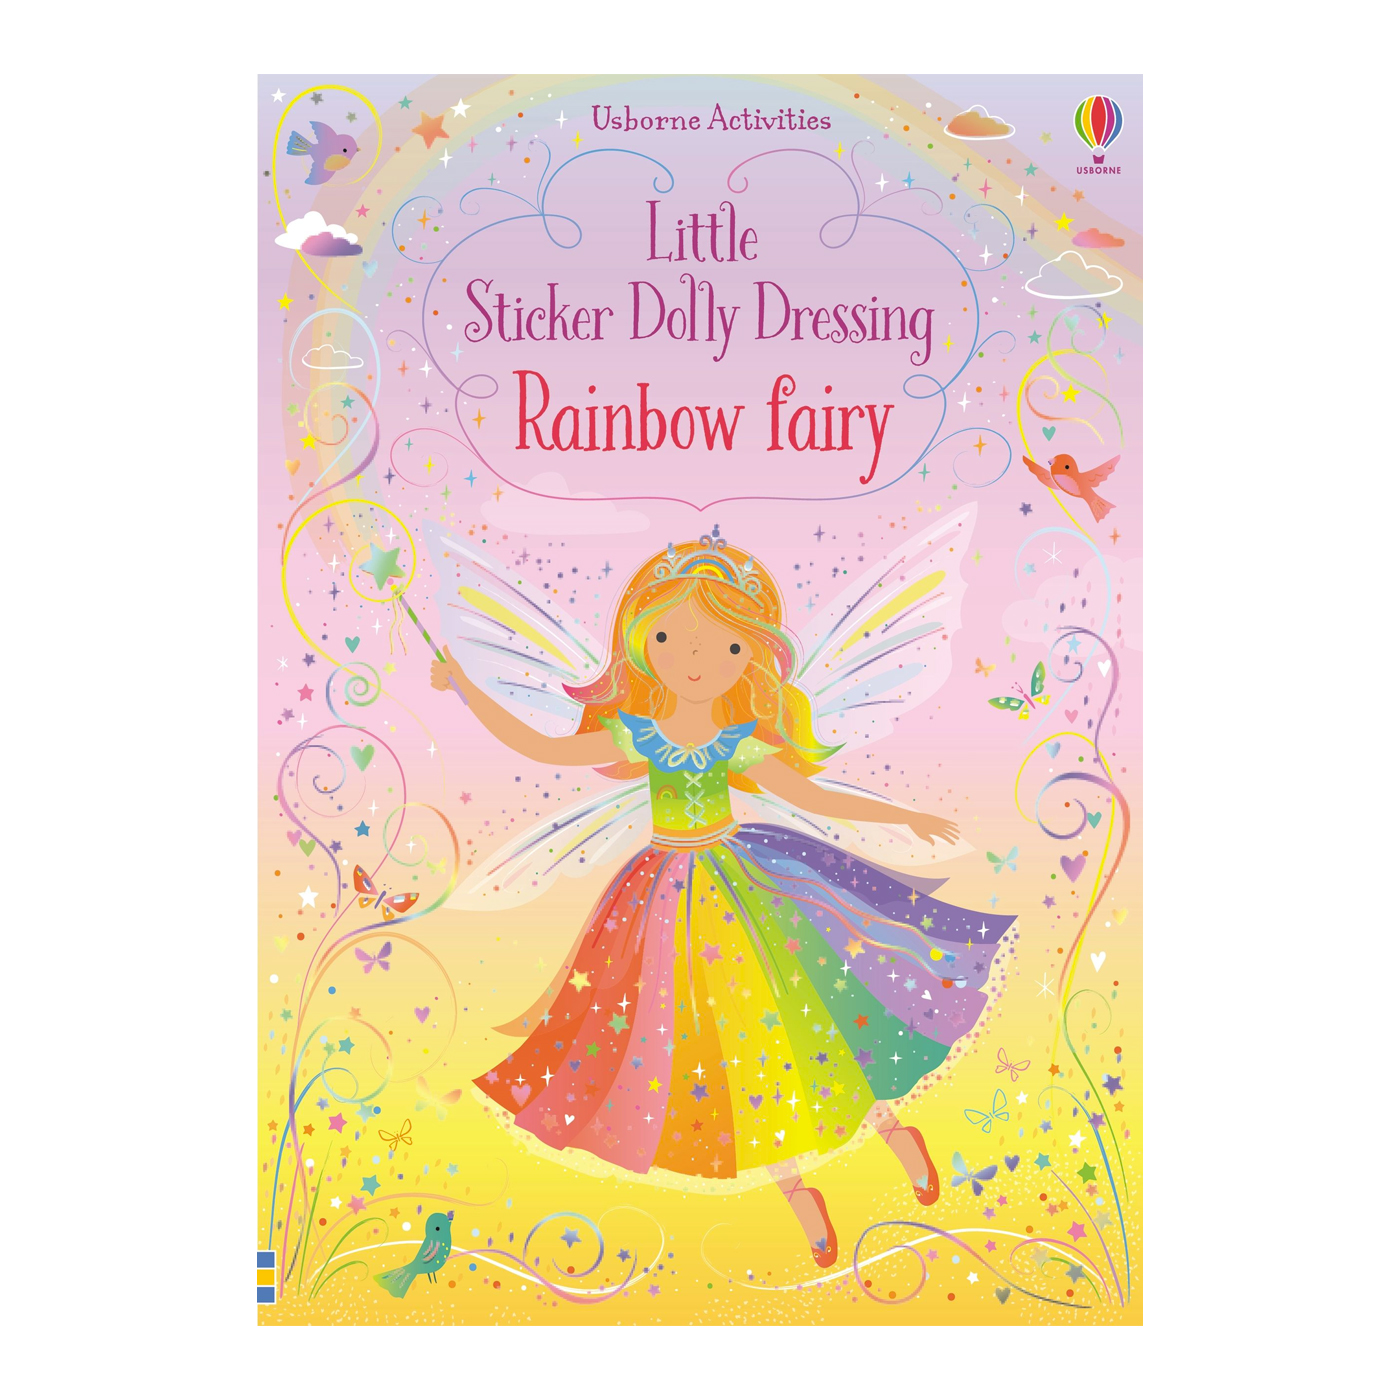  Little Sticker Dolly Dressing Rainbow Fairy